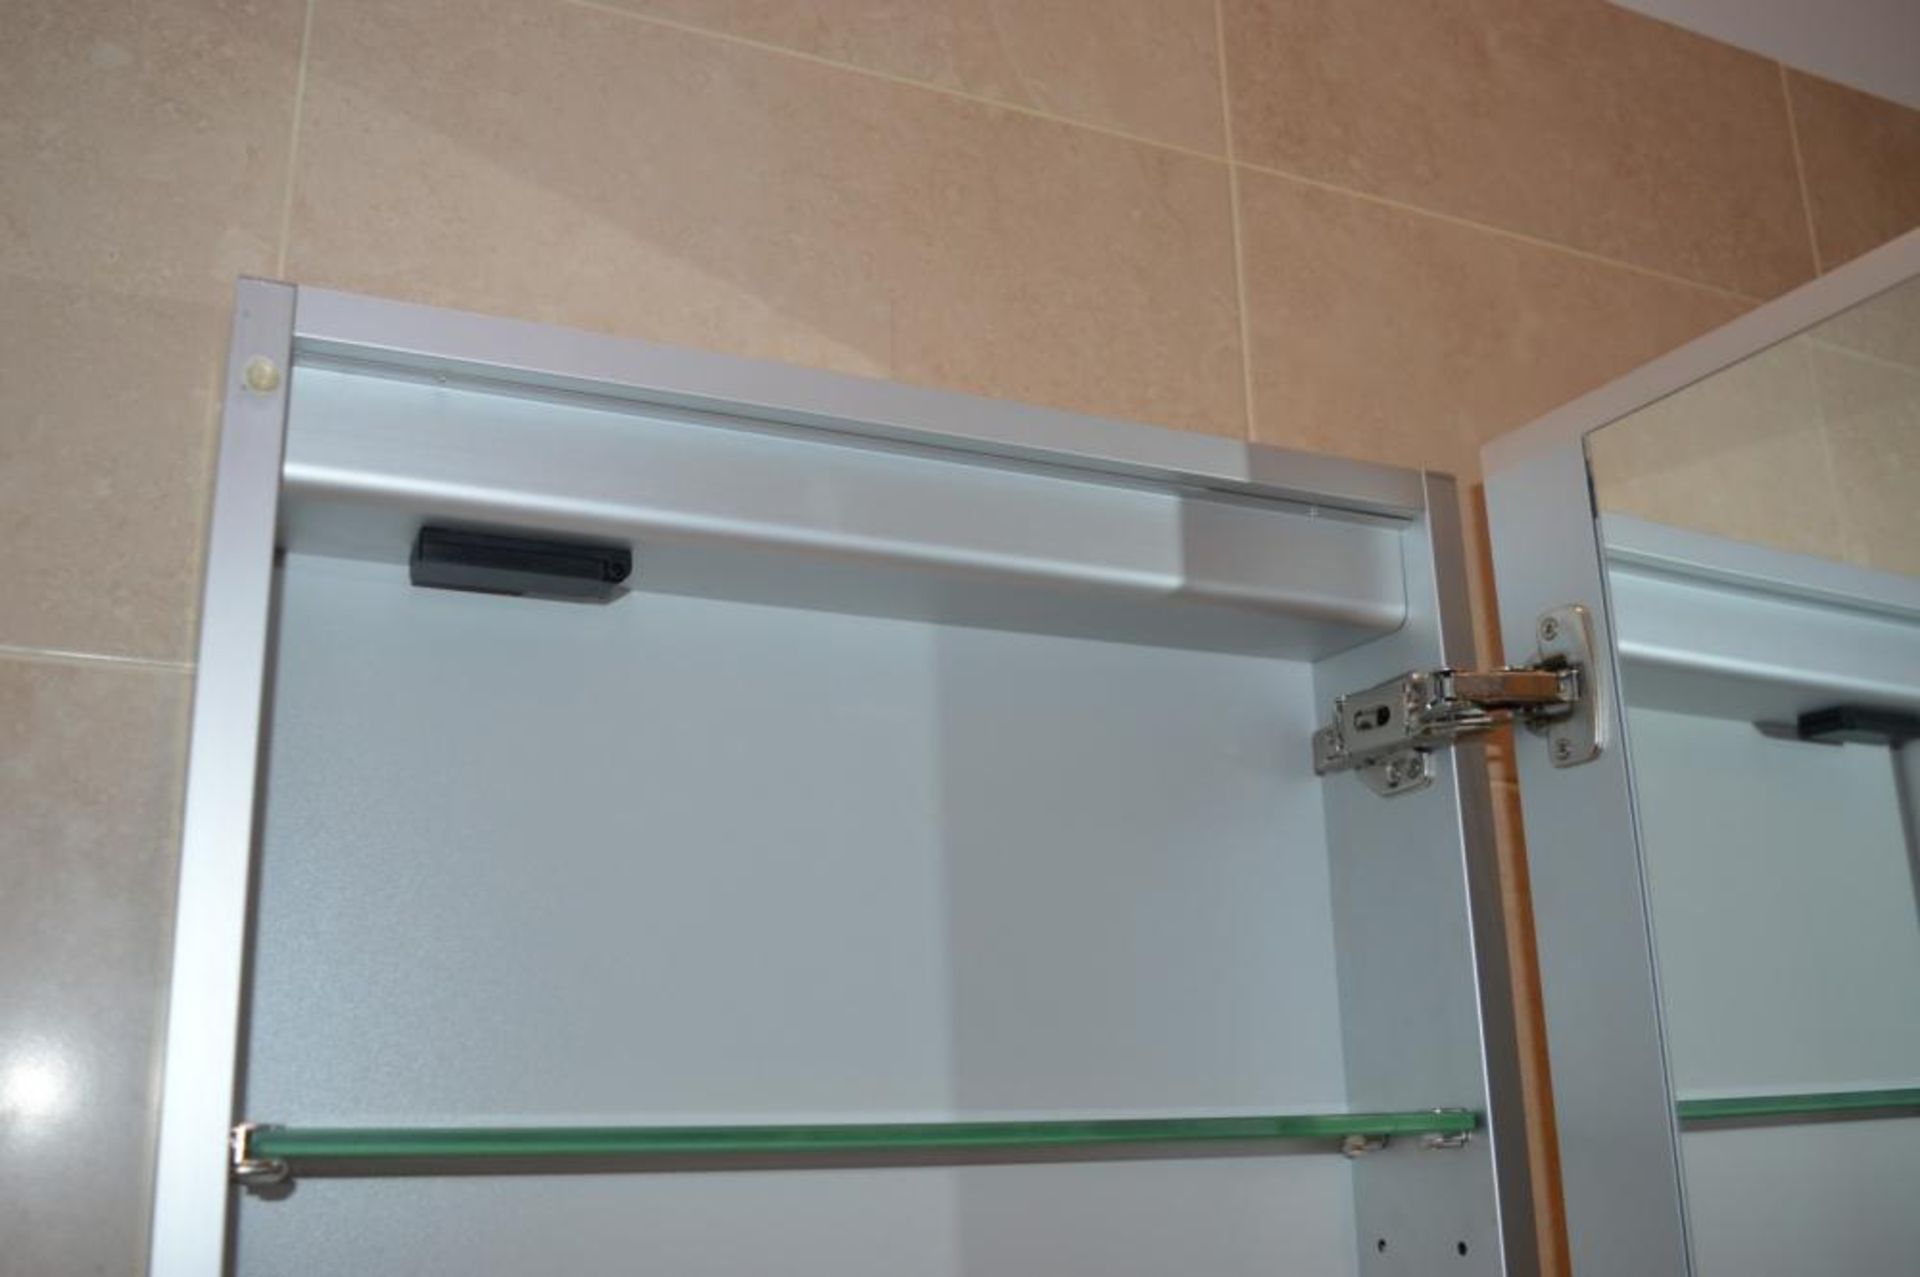 1 x Voda Design Mirrored Bathroom Cabinet 303 Aluminium With Balck Light and Shaver Socket - H70 x W - Image 4 of 4